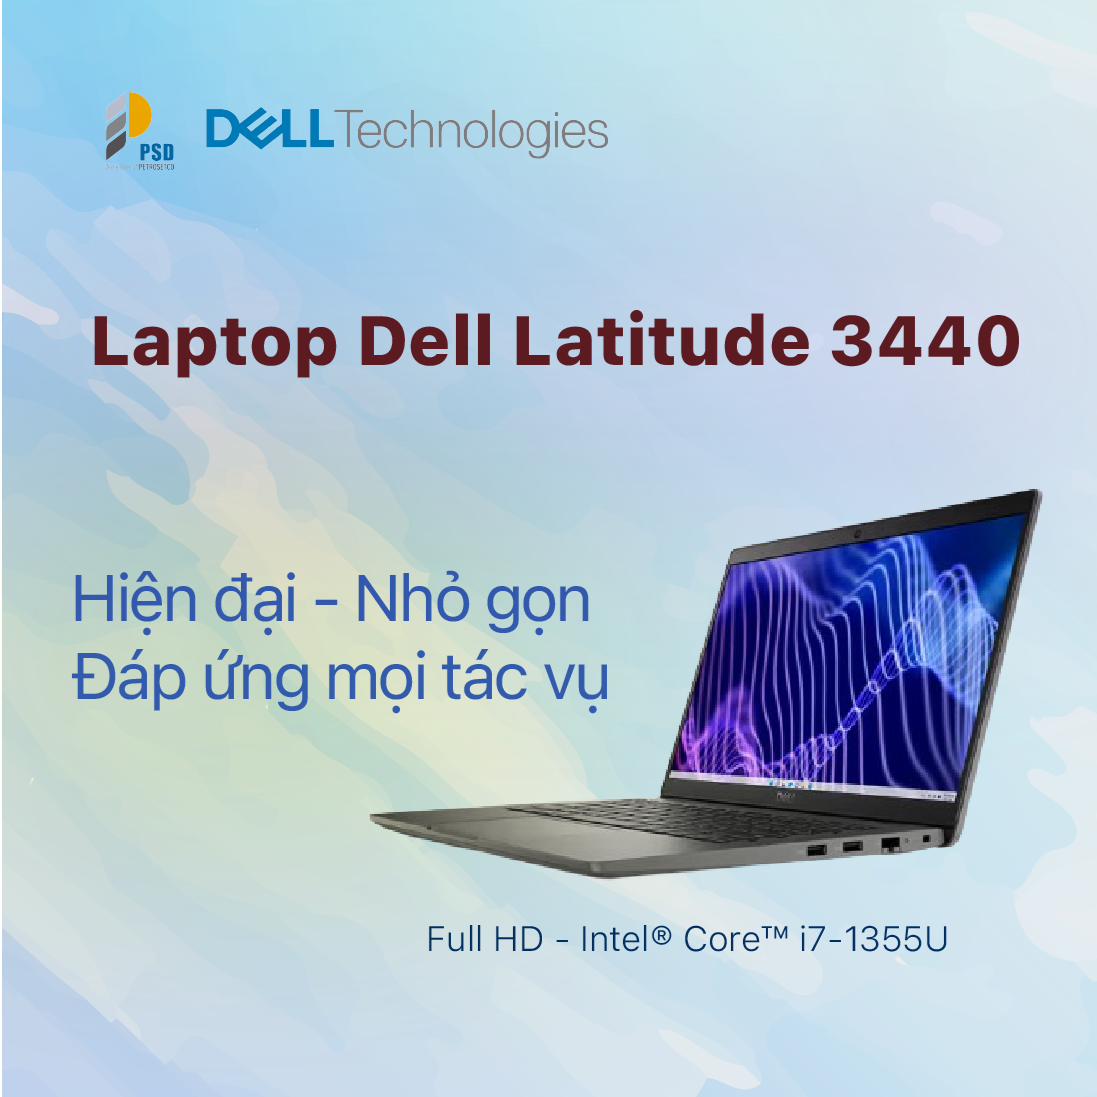 Dell Latitude E3440 - Hiệu năng bền bỉ